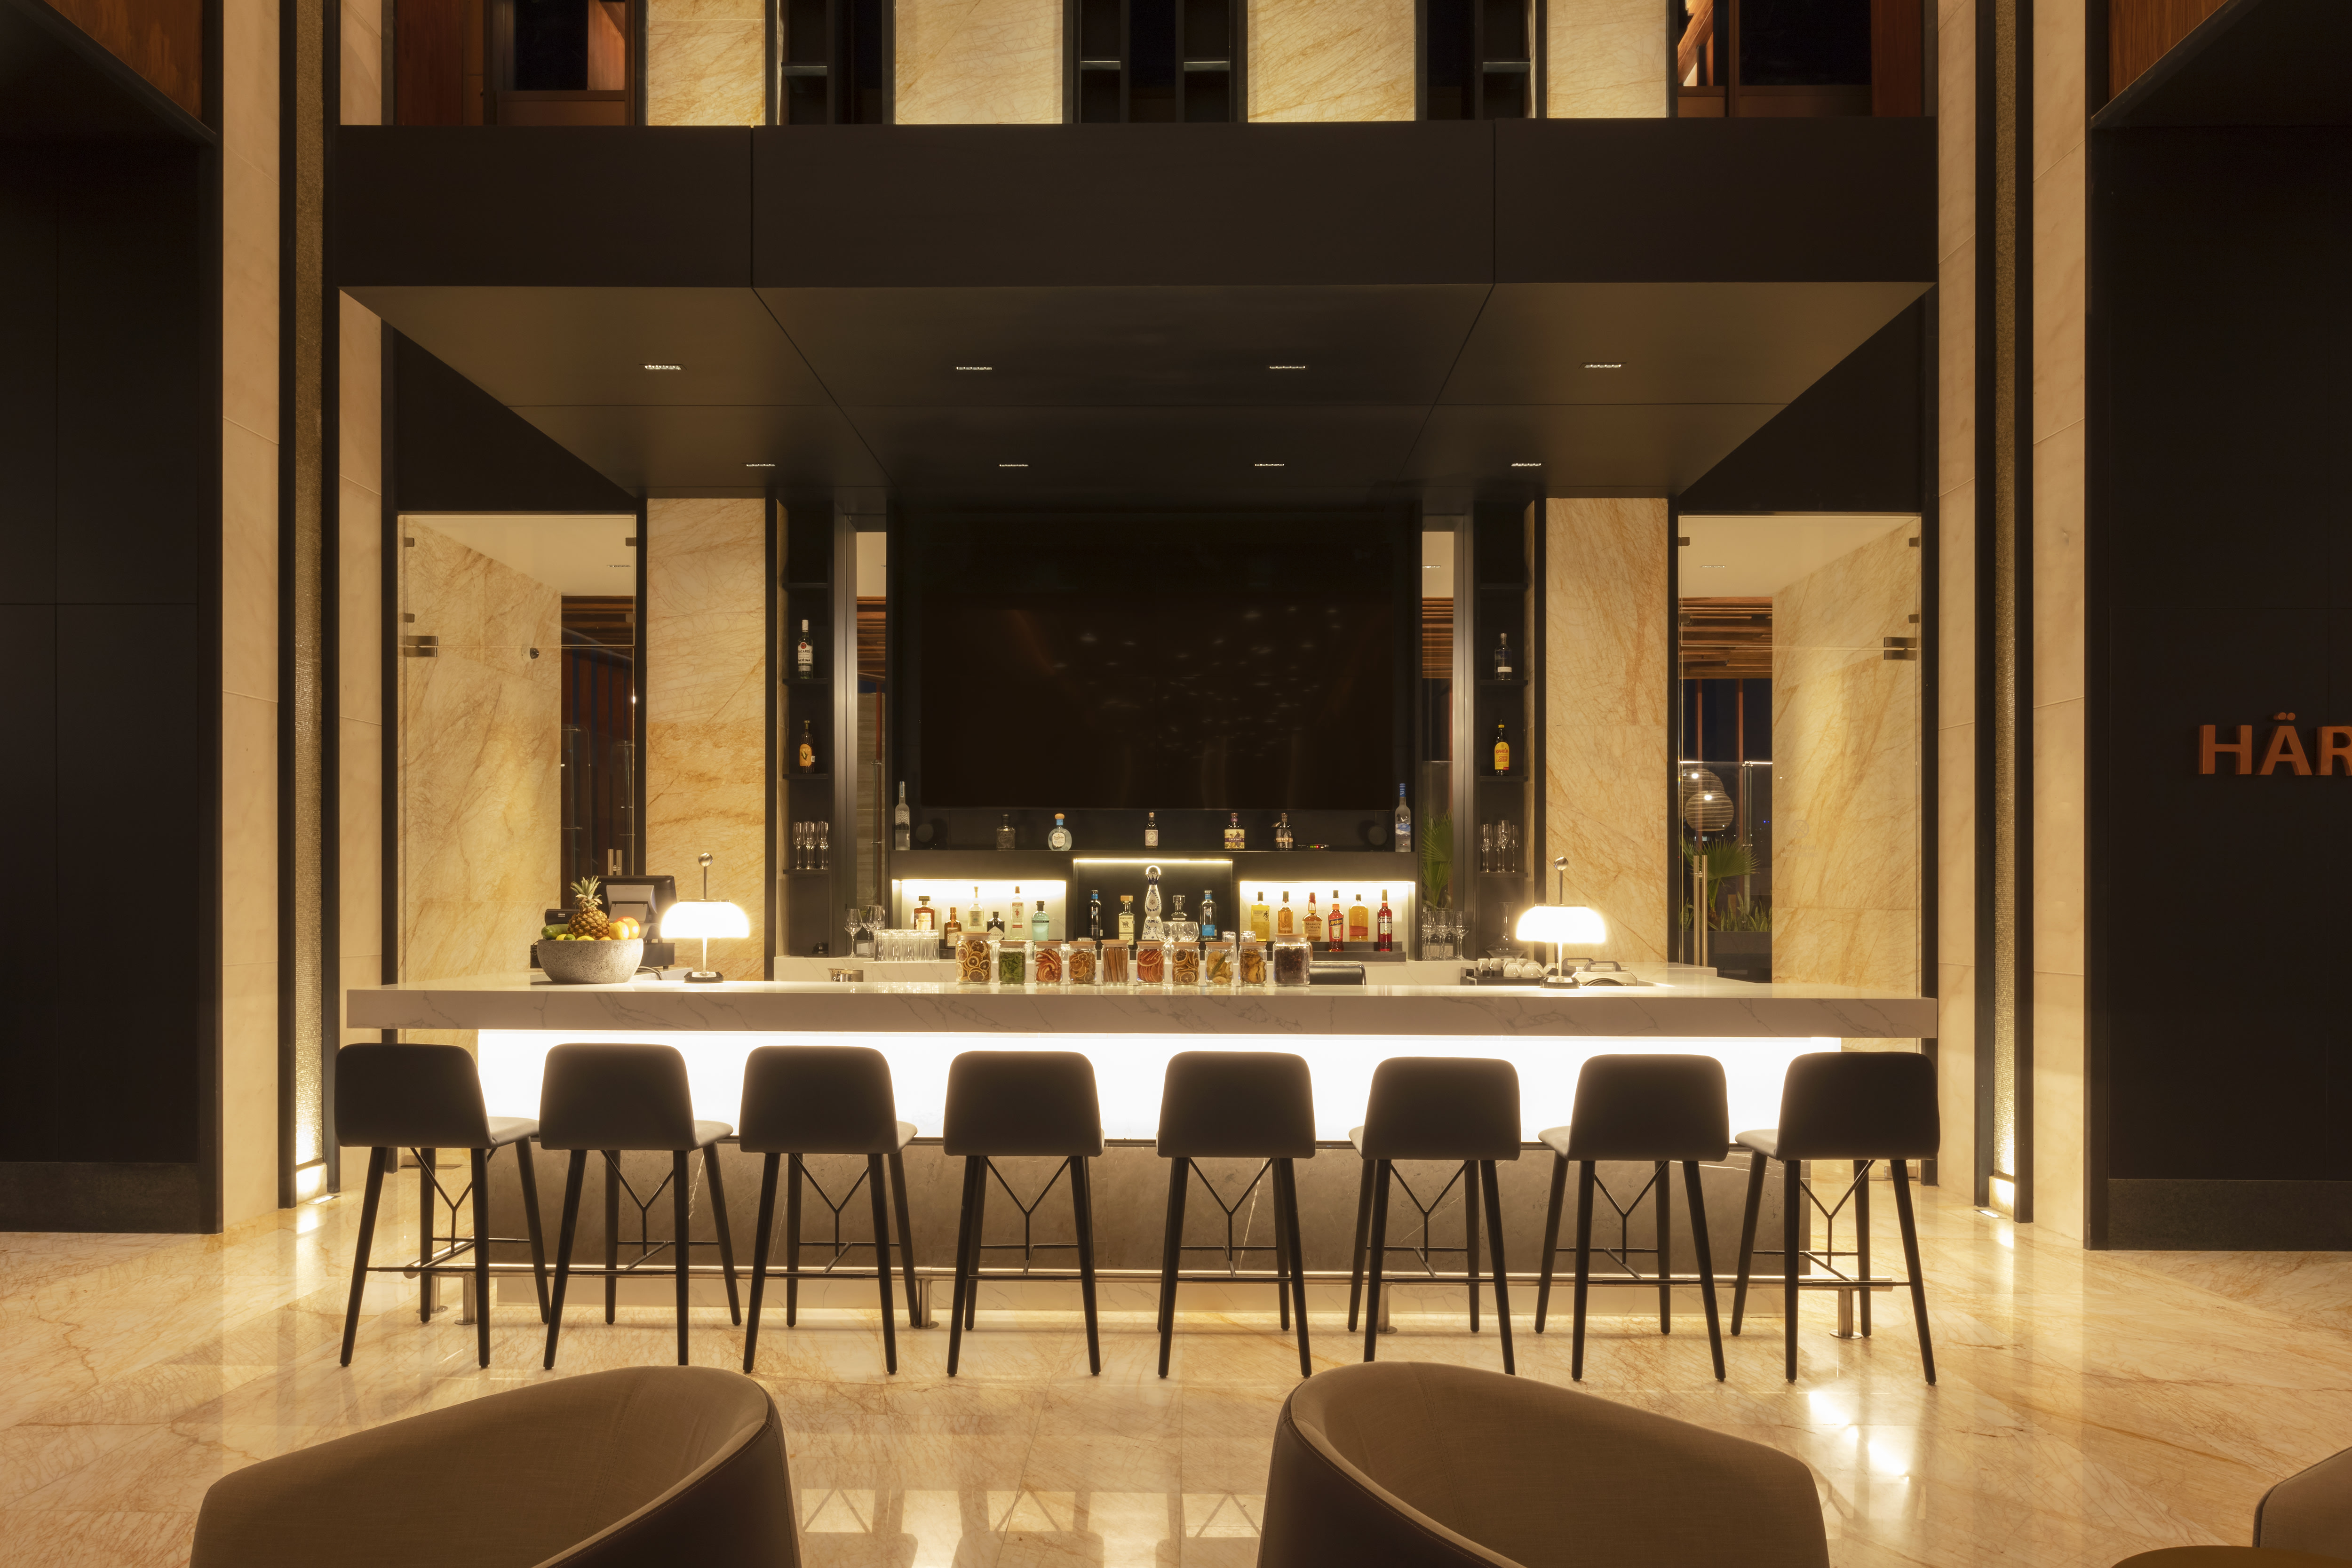 Hotel lobby bar